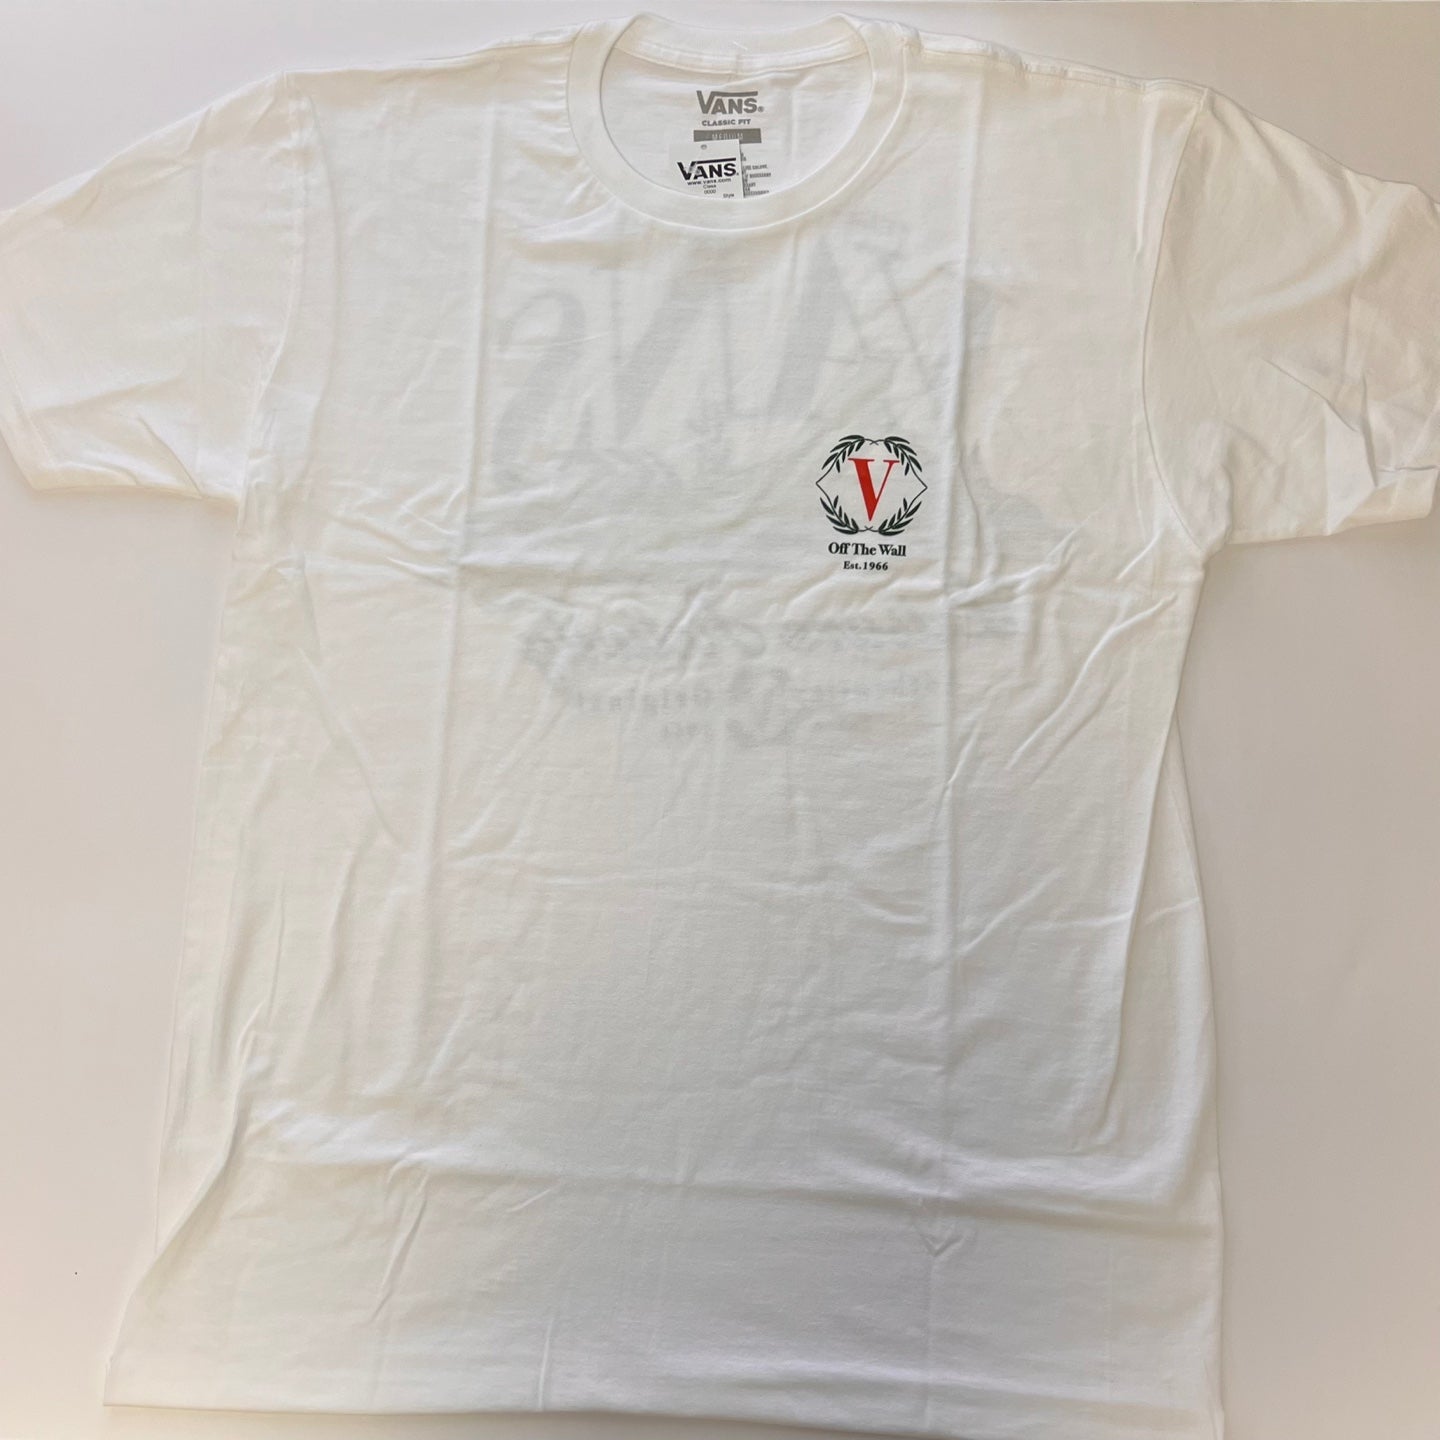 VANS Leisure Activity Graphic T-Shirt